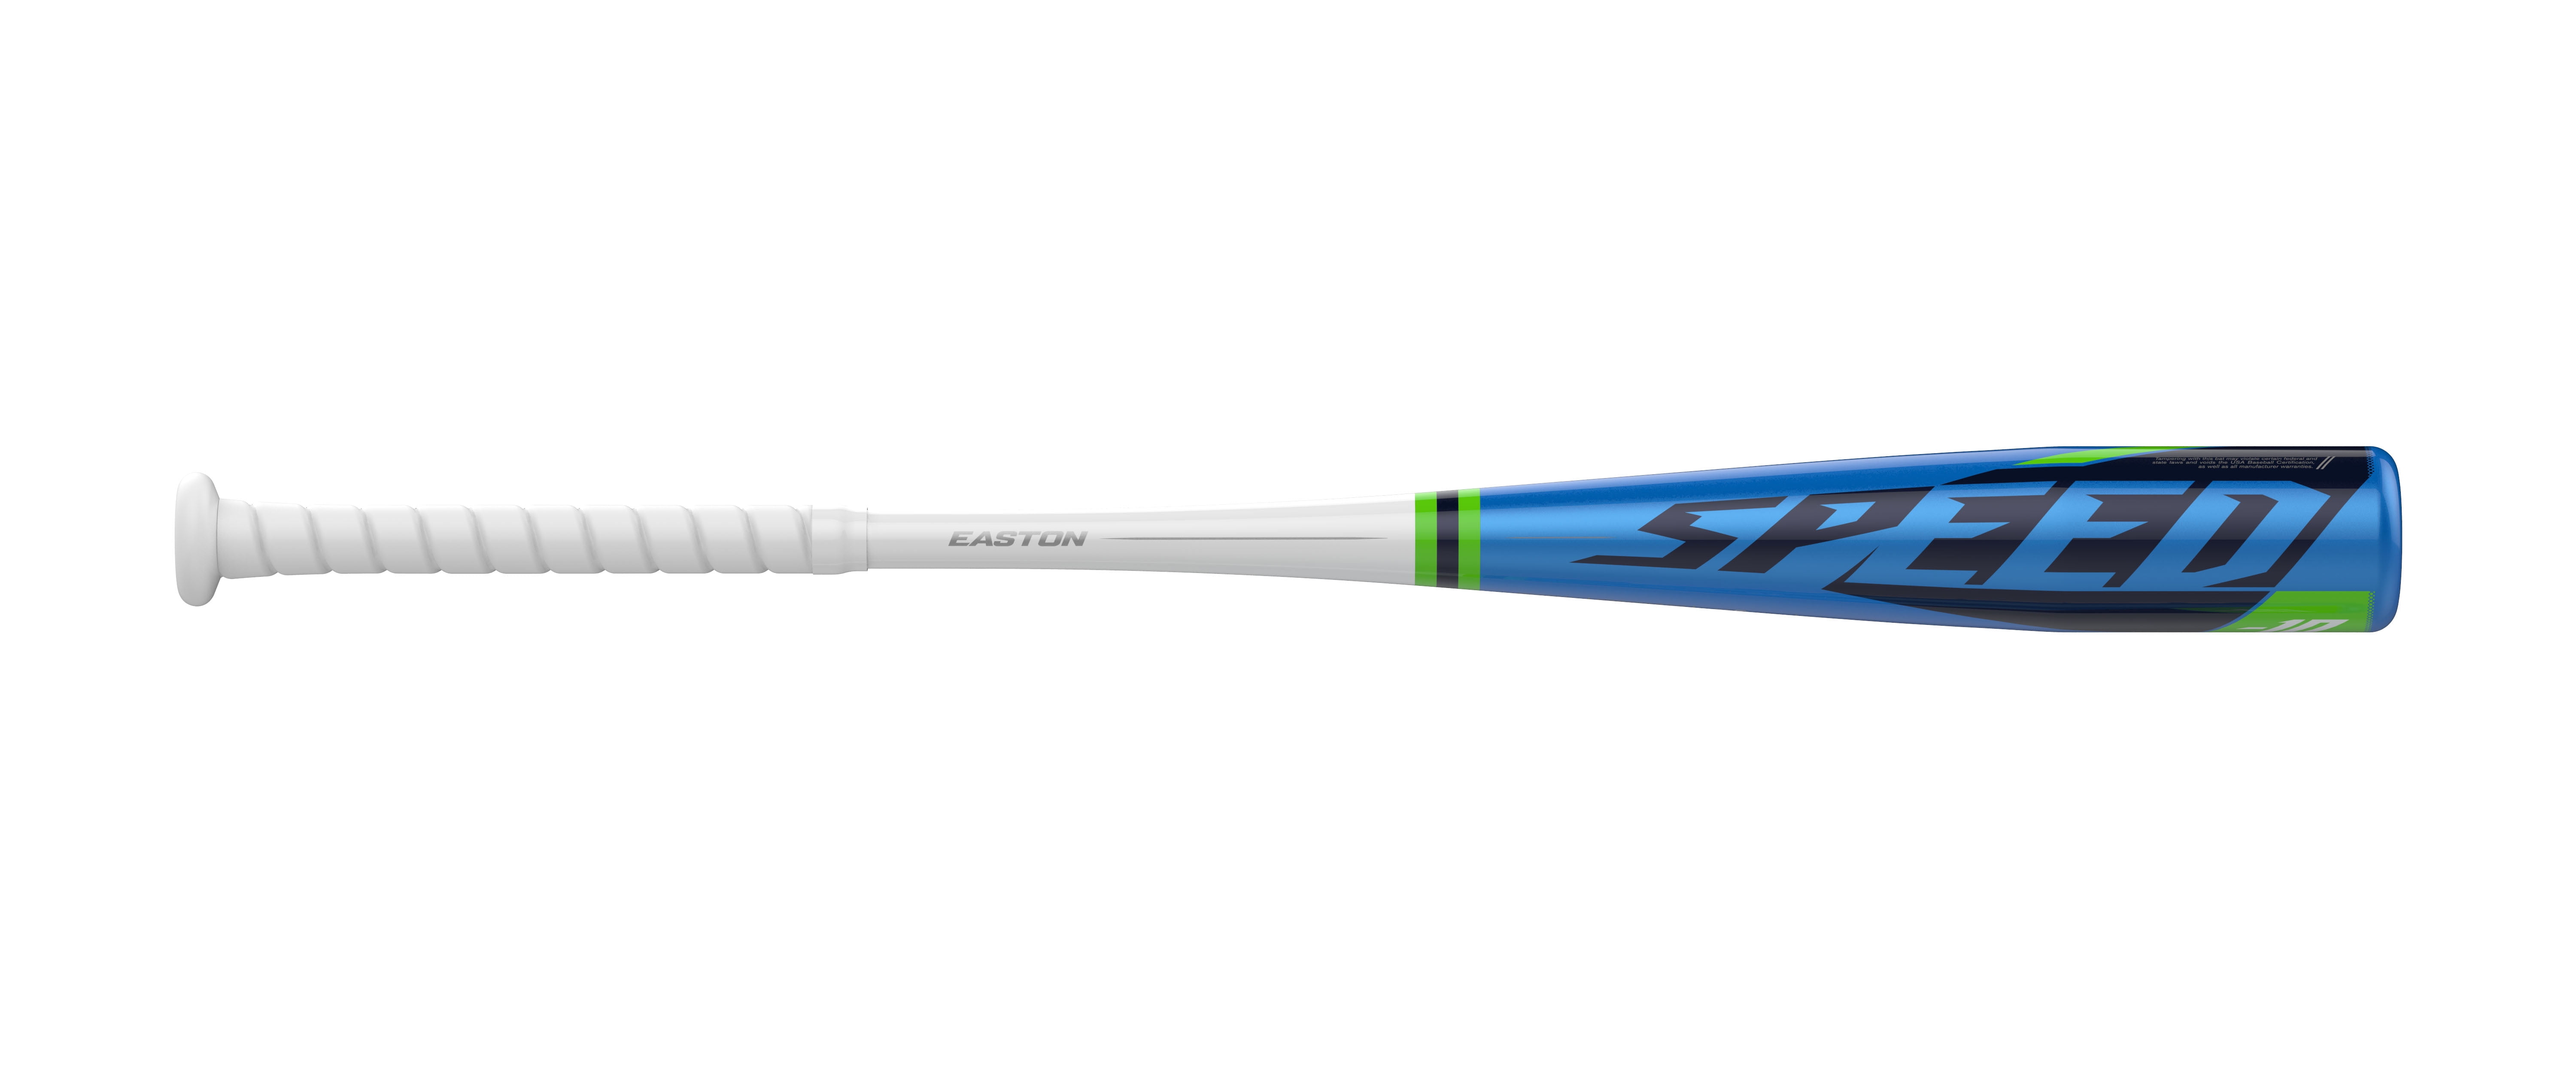 EASTON 2022 SPEED USA Youth Baseball Bat, 30 inch (-10)